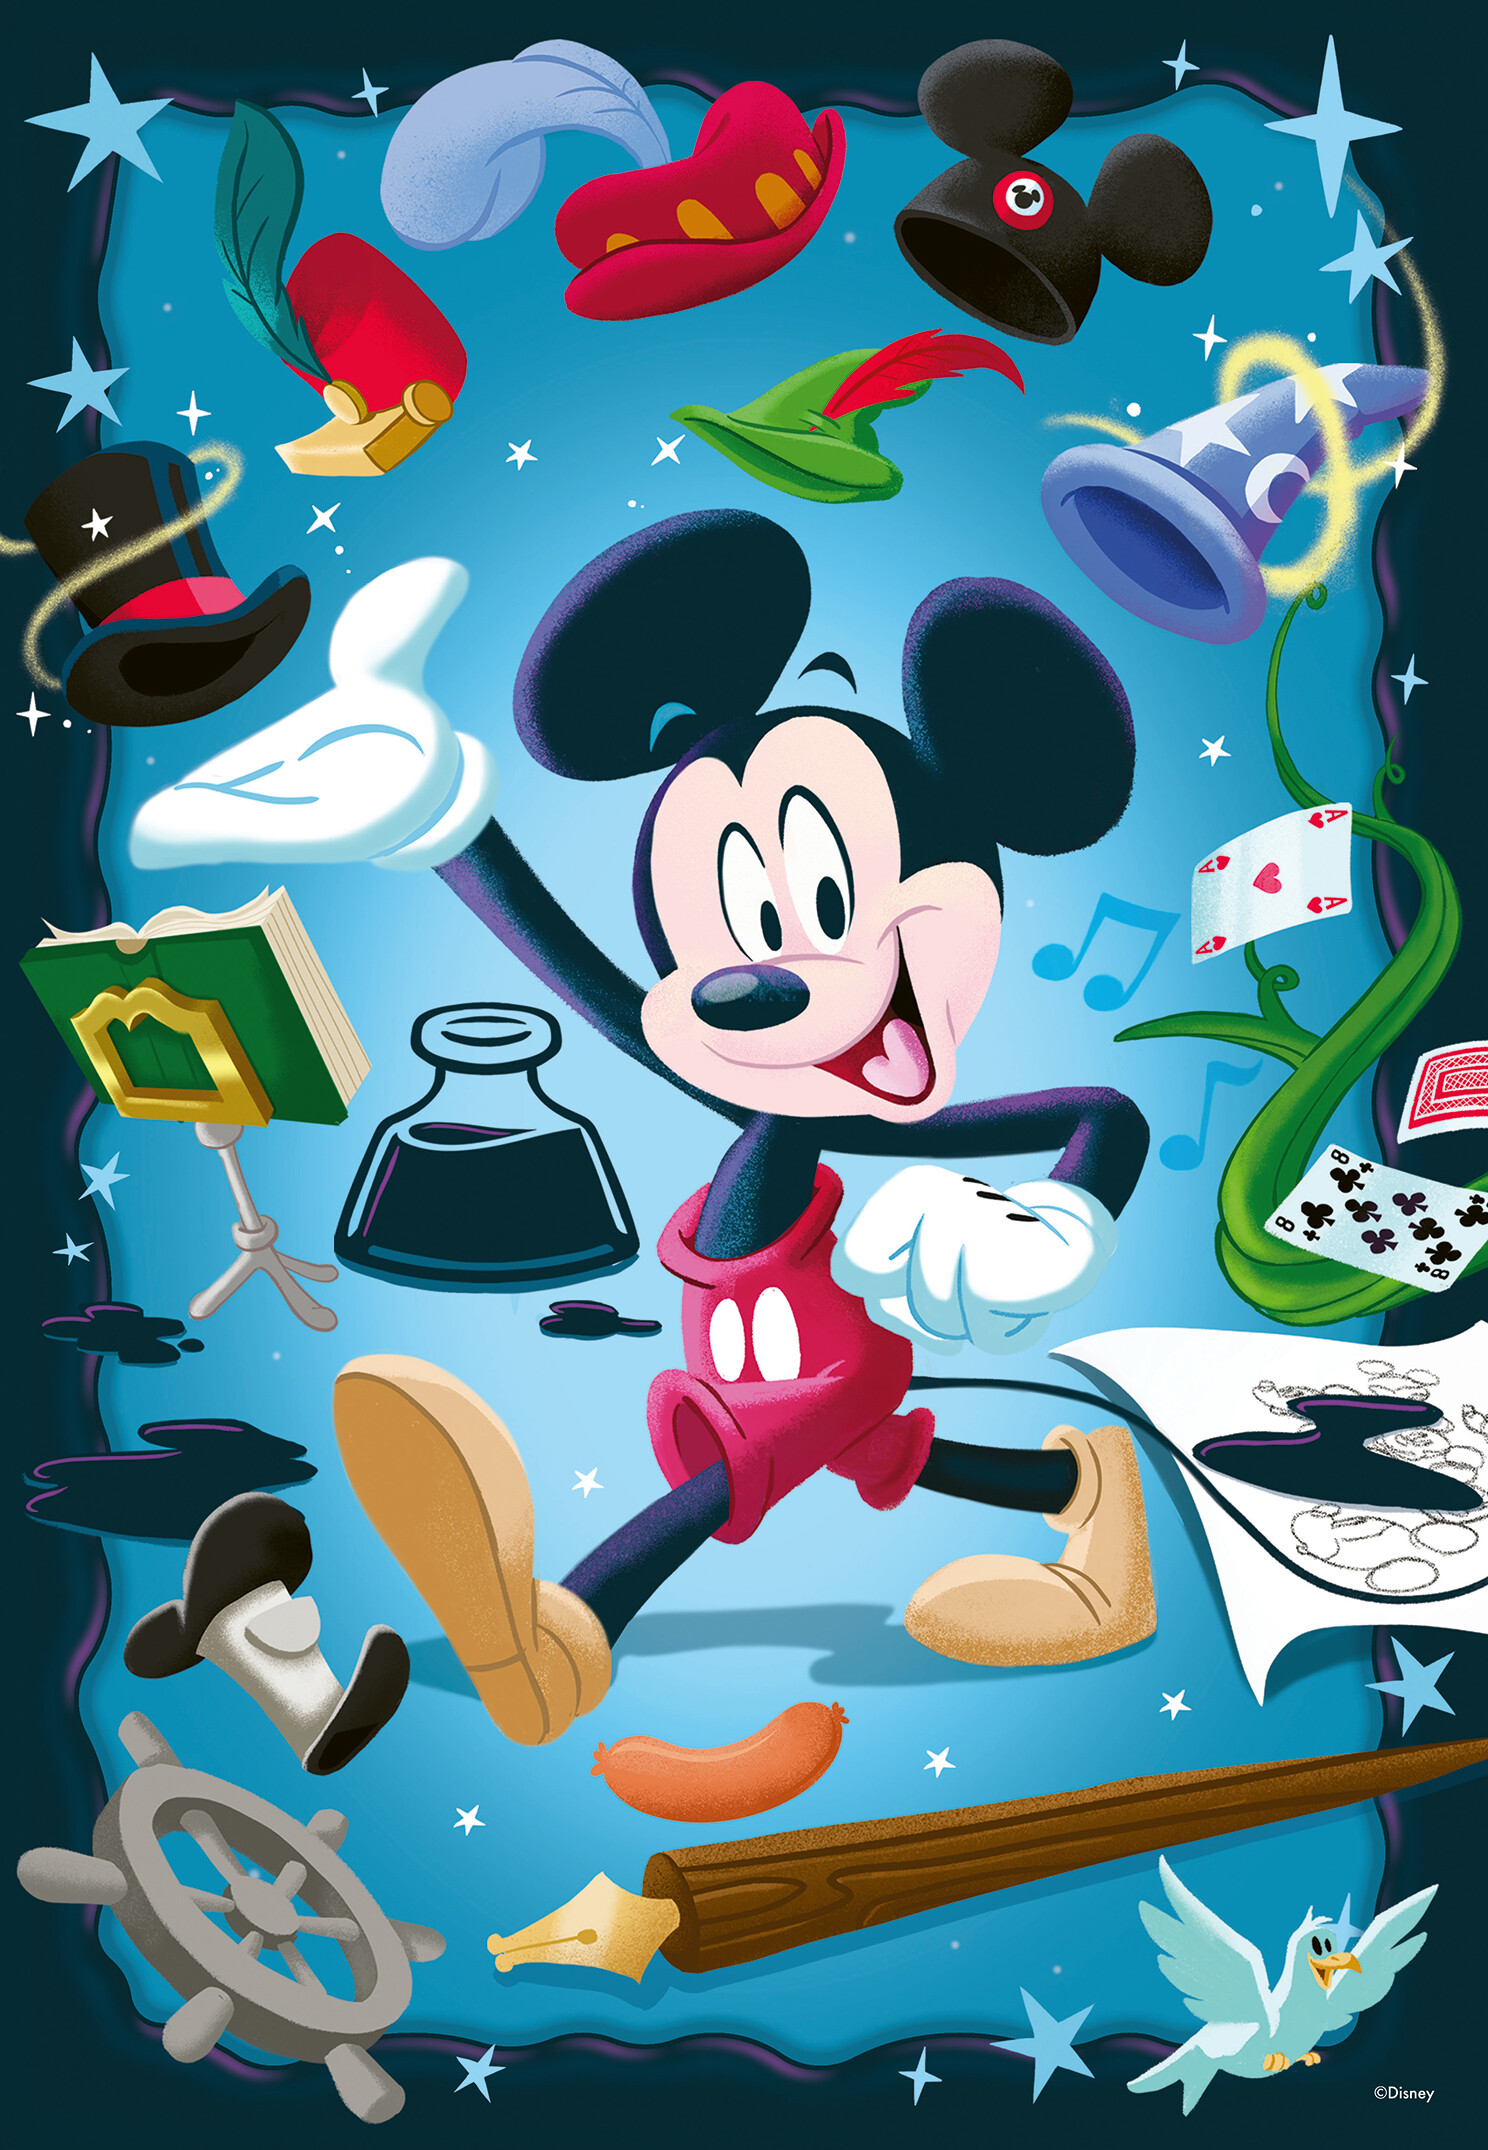 Ravensburger - puzzle disney mickey mouse, 300 pezzi, 8+, limited edition disney 100 - RAVENSBURGER, Mickey Mouse